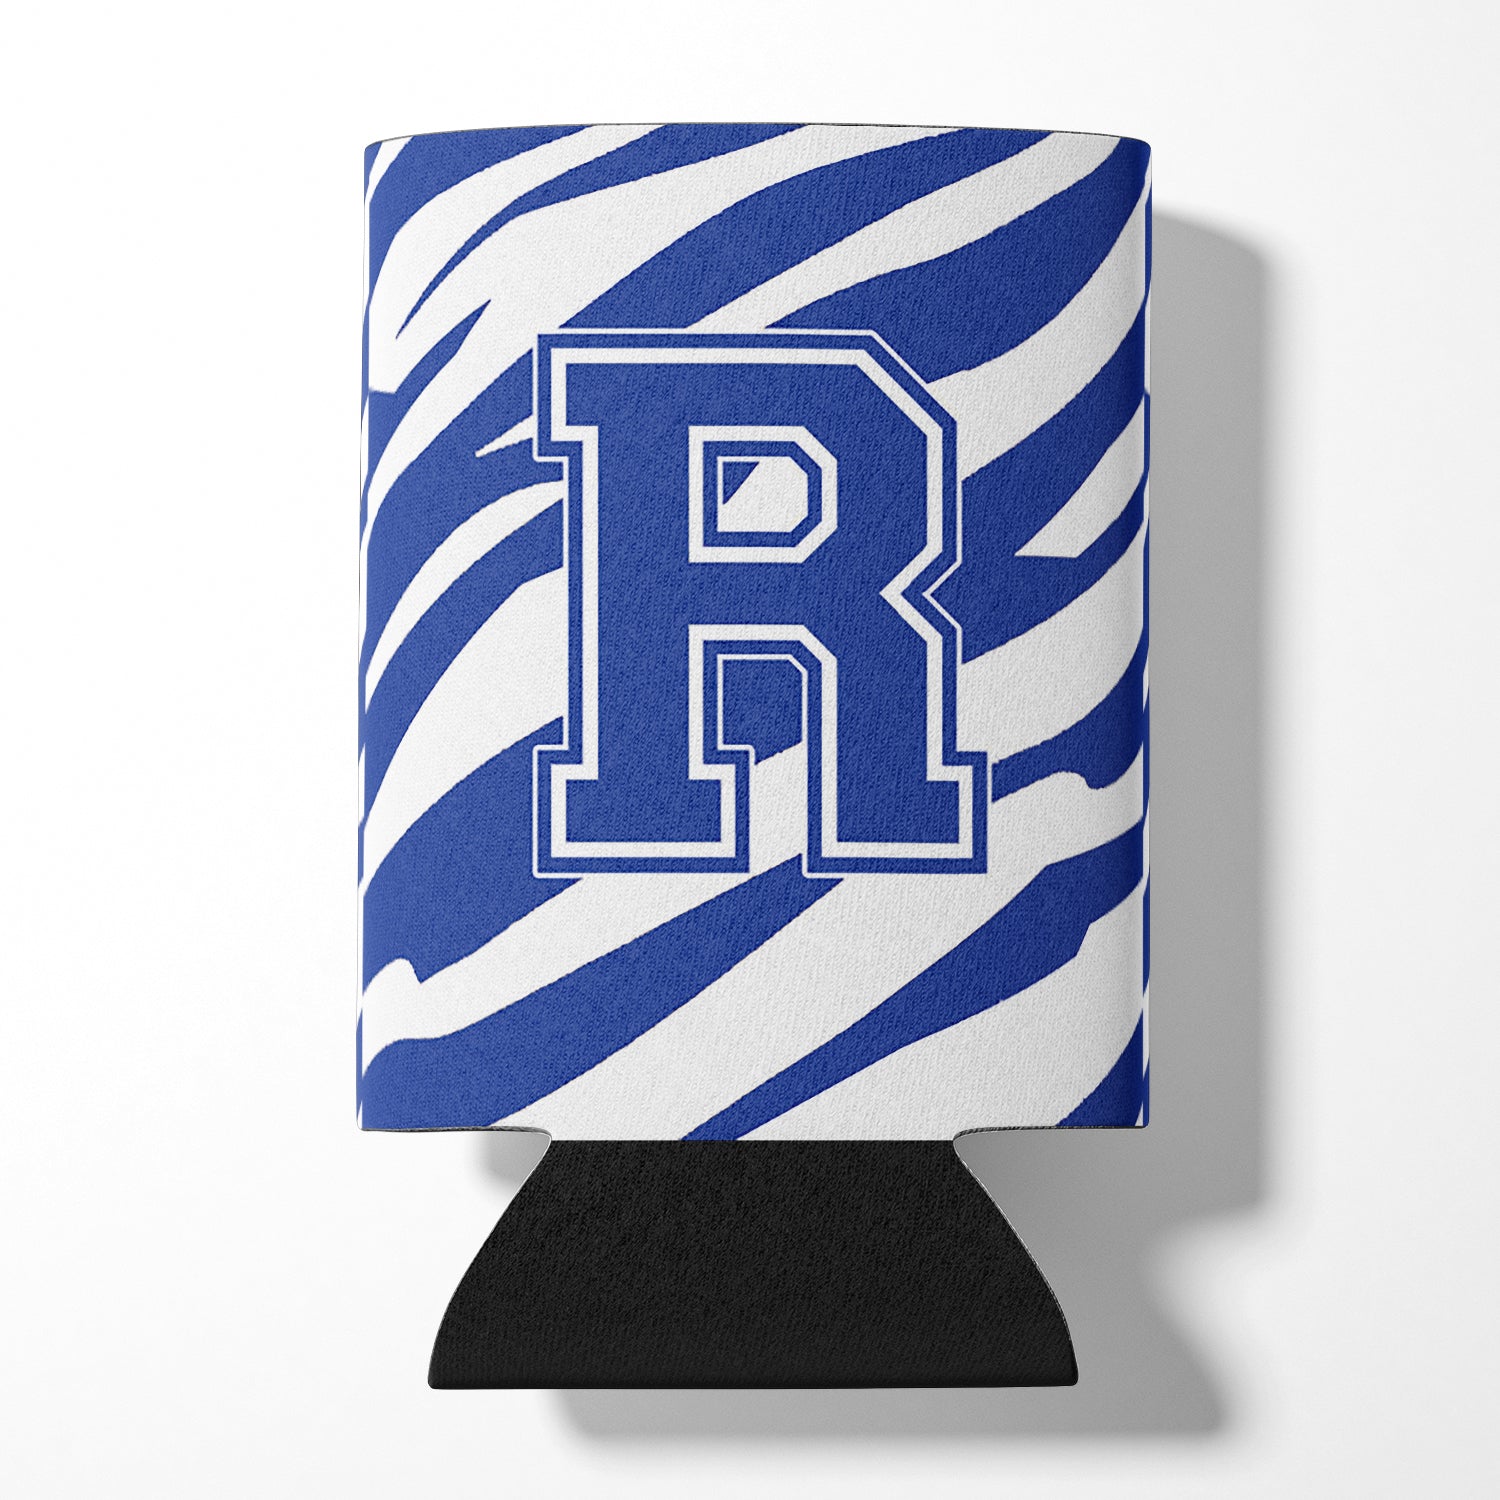 Letter R Initial Monogram - Tiger Stripe Blue and White Can Beverage Insulator Hugger